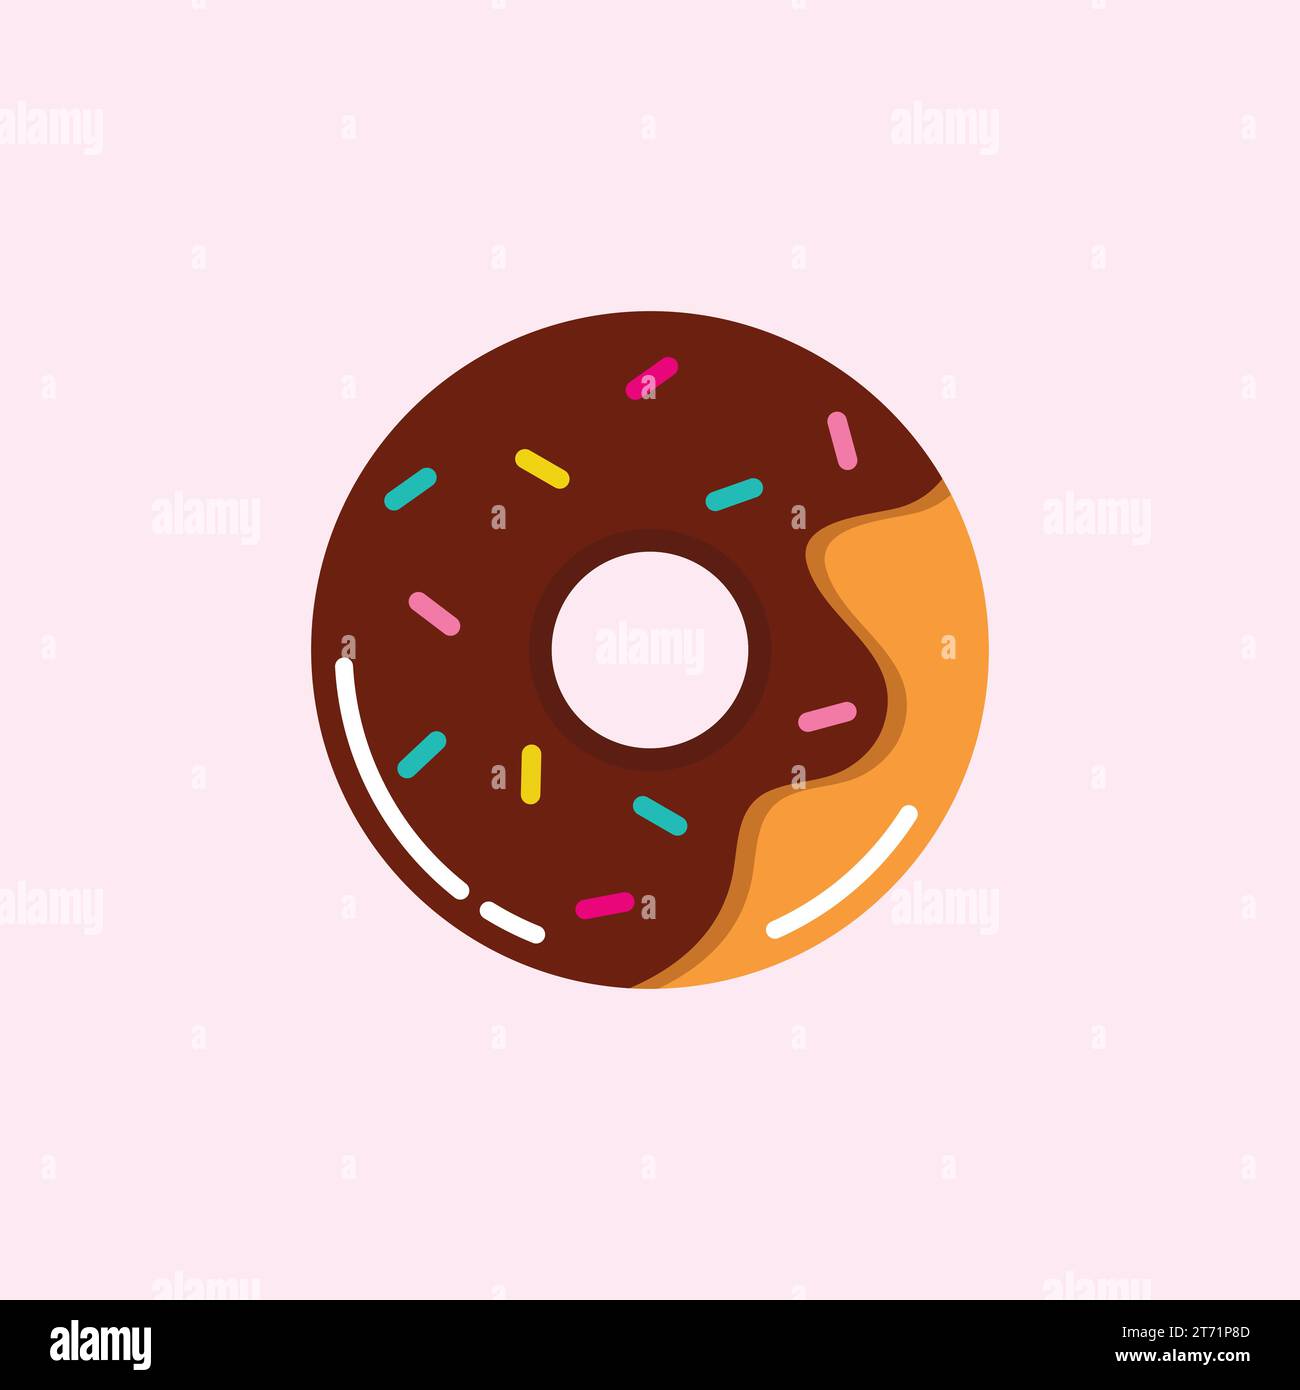 Süße Schokolade Donut Vektor Illustration. Amerikanisches traditionelles Essen Stock Vektor